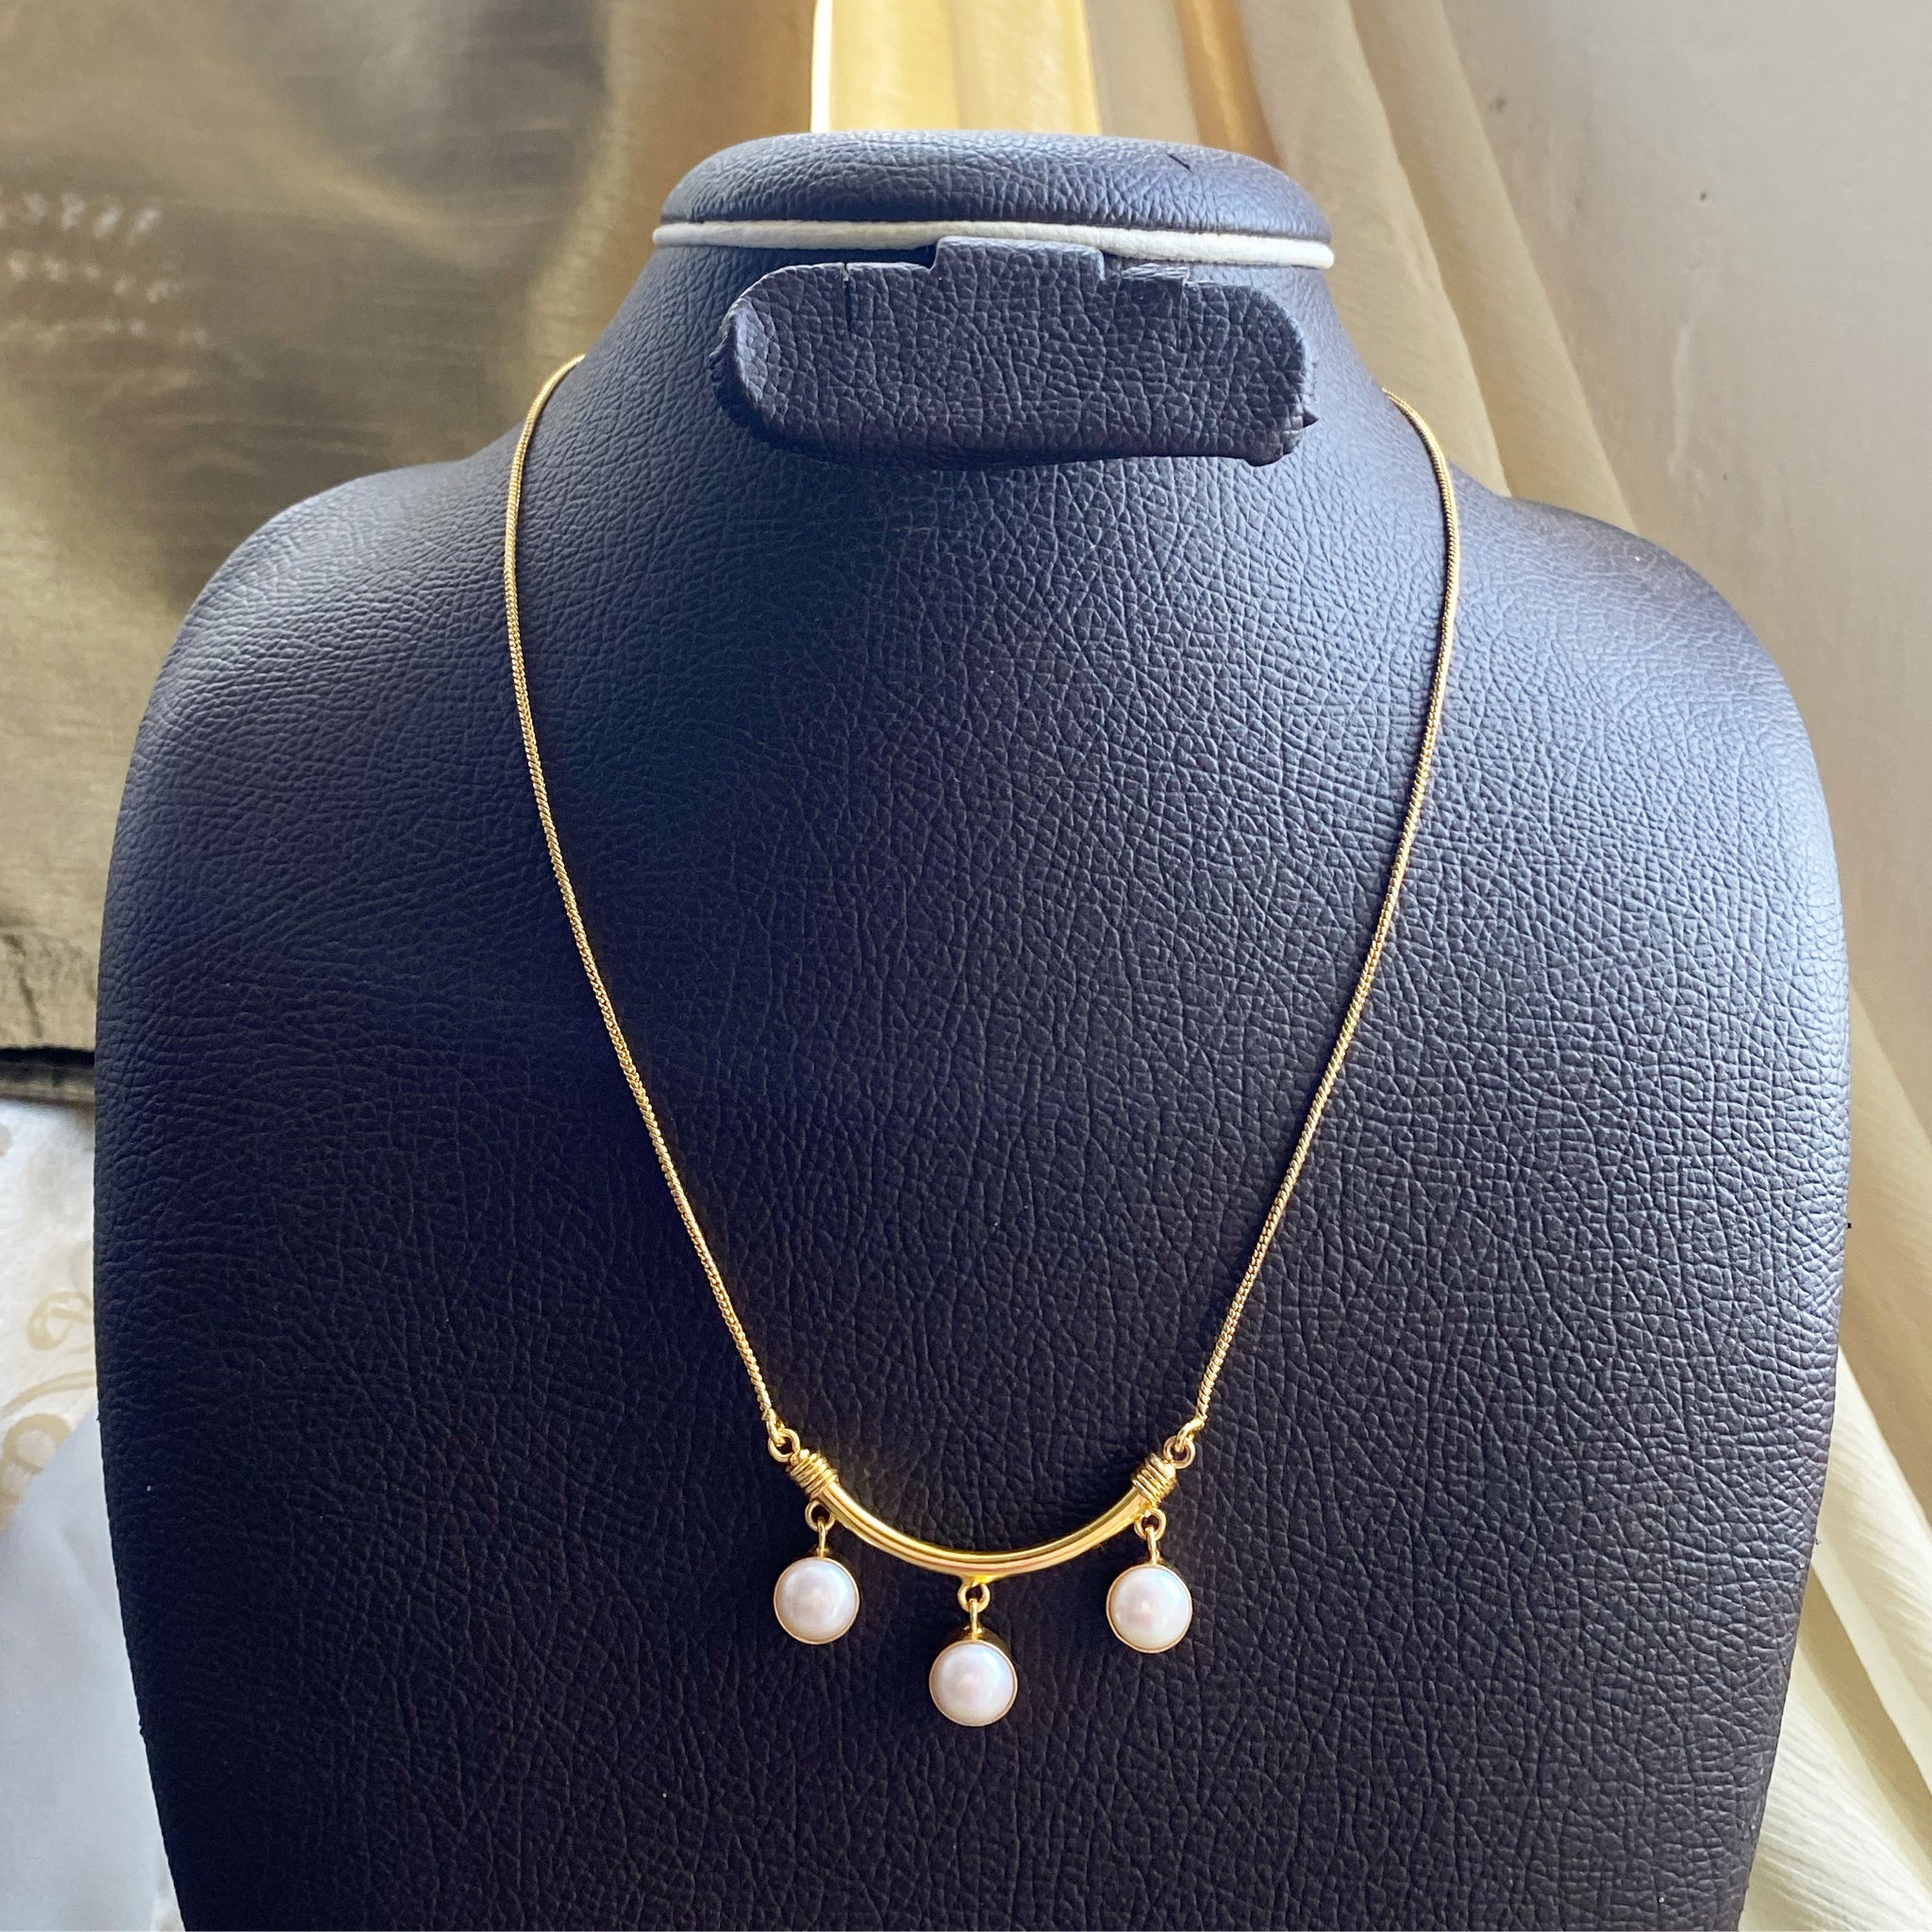 Très pearls short necklace